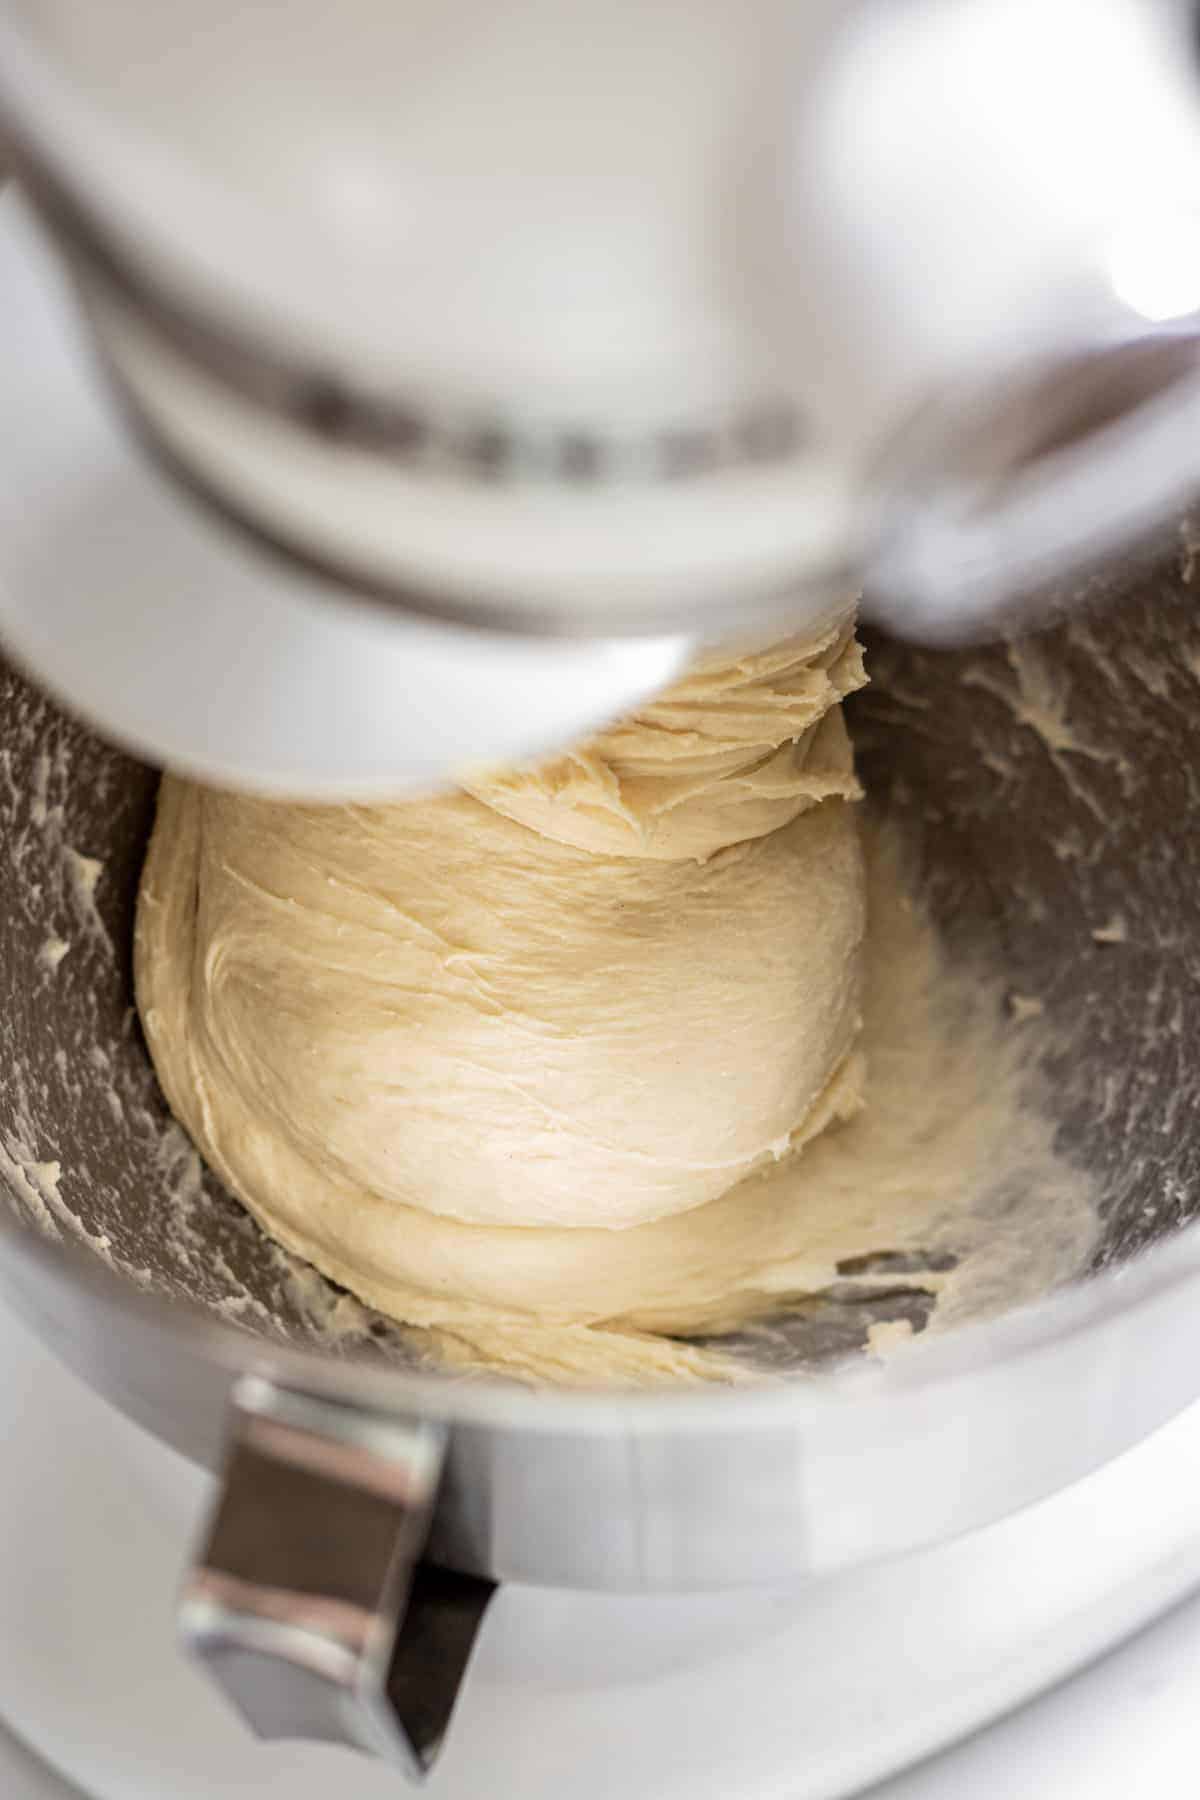 fluffy milk bread dough being mixed.